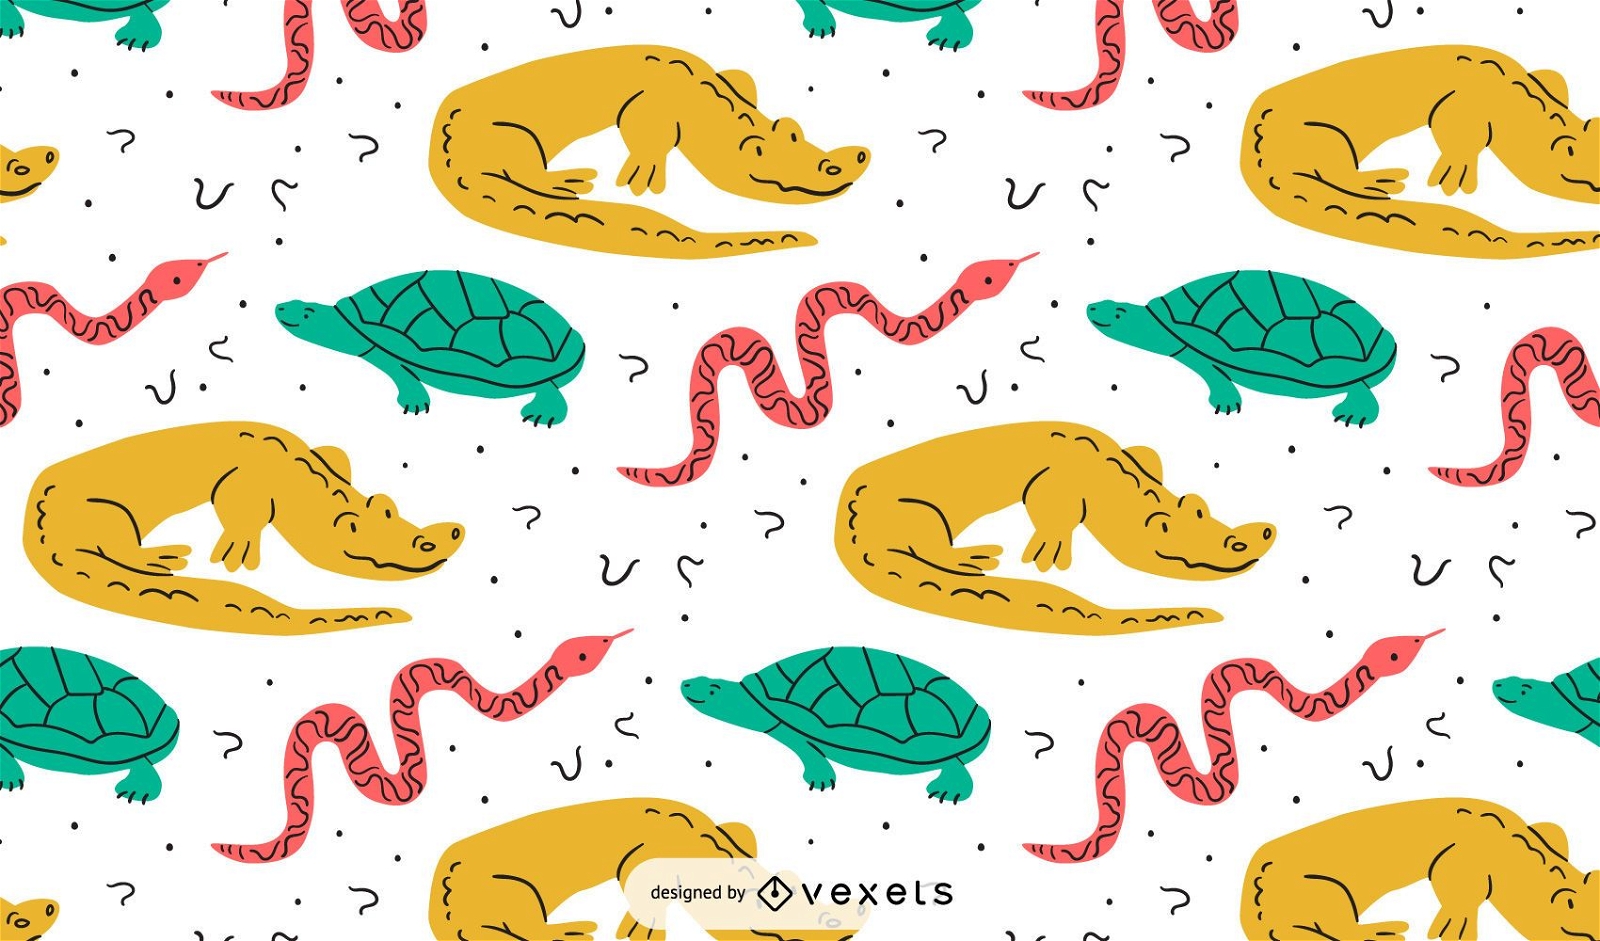 Colorful reptiles pattern design